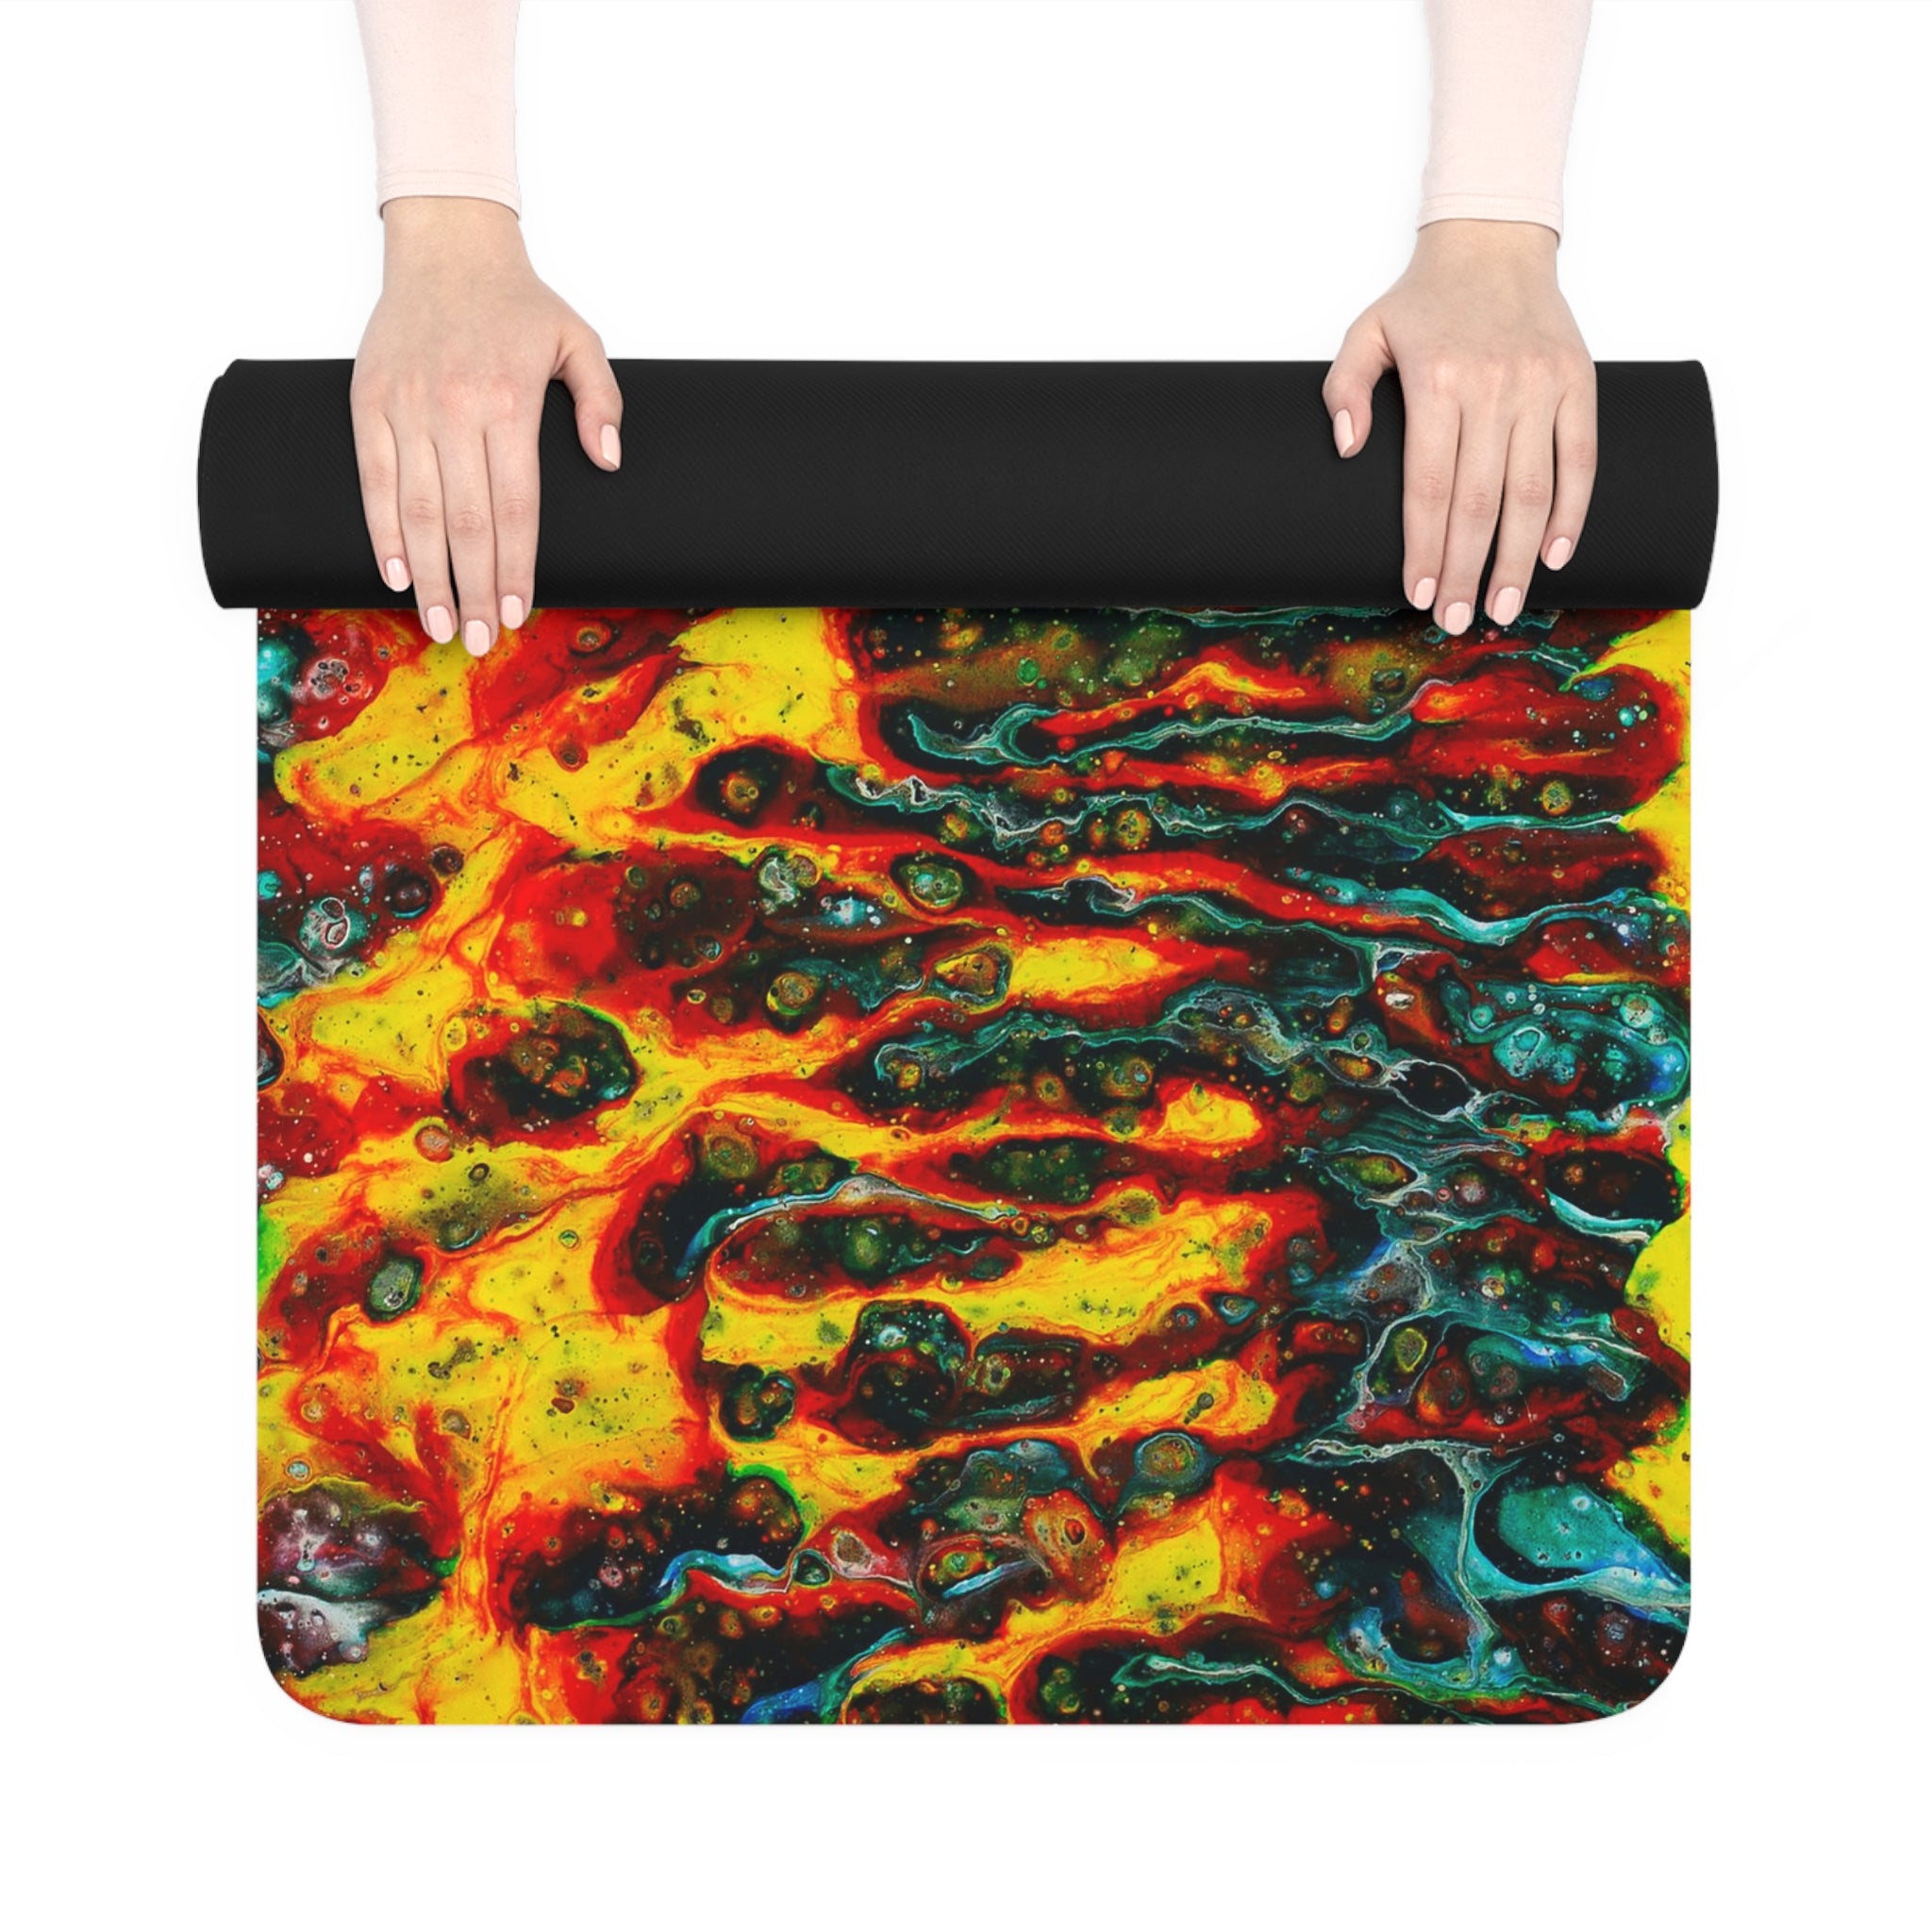 Floating Flames - Rubber Yoga Mat